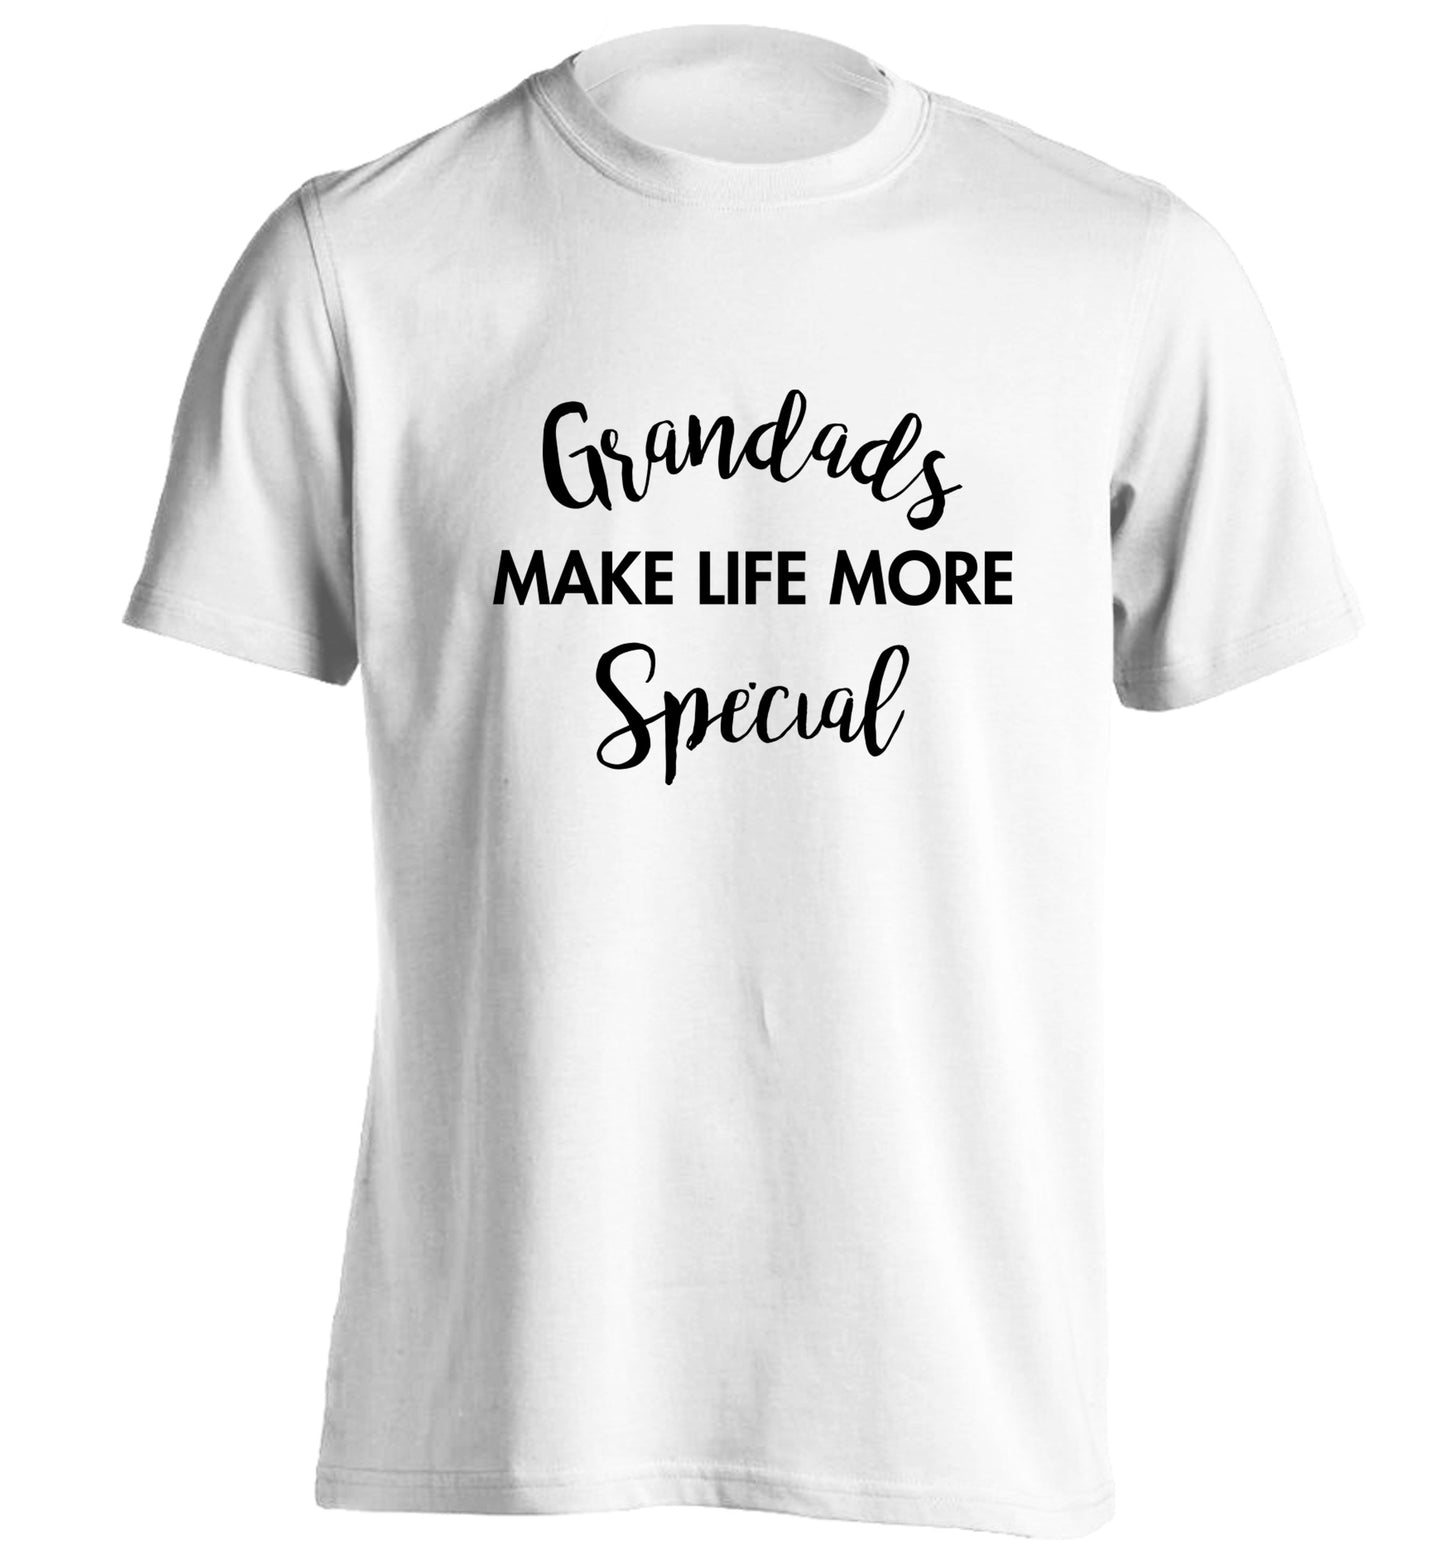 Grandads make life more special adults unisex white Tshirt 2XL